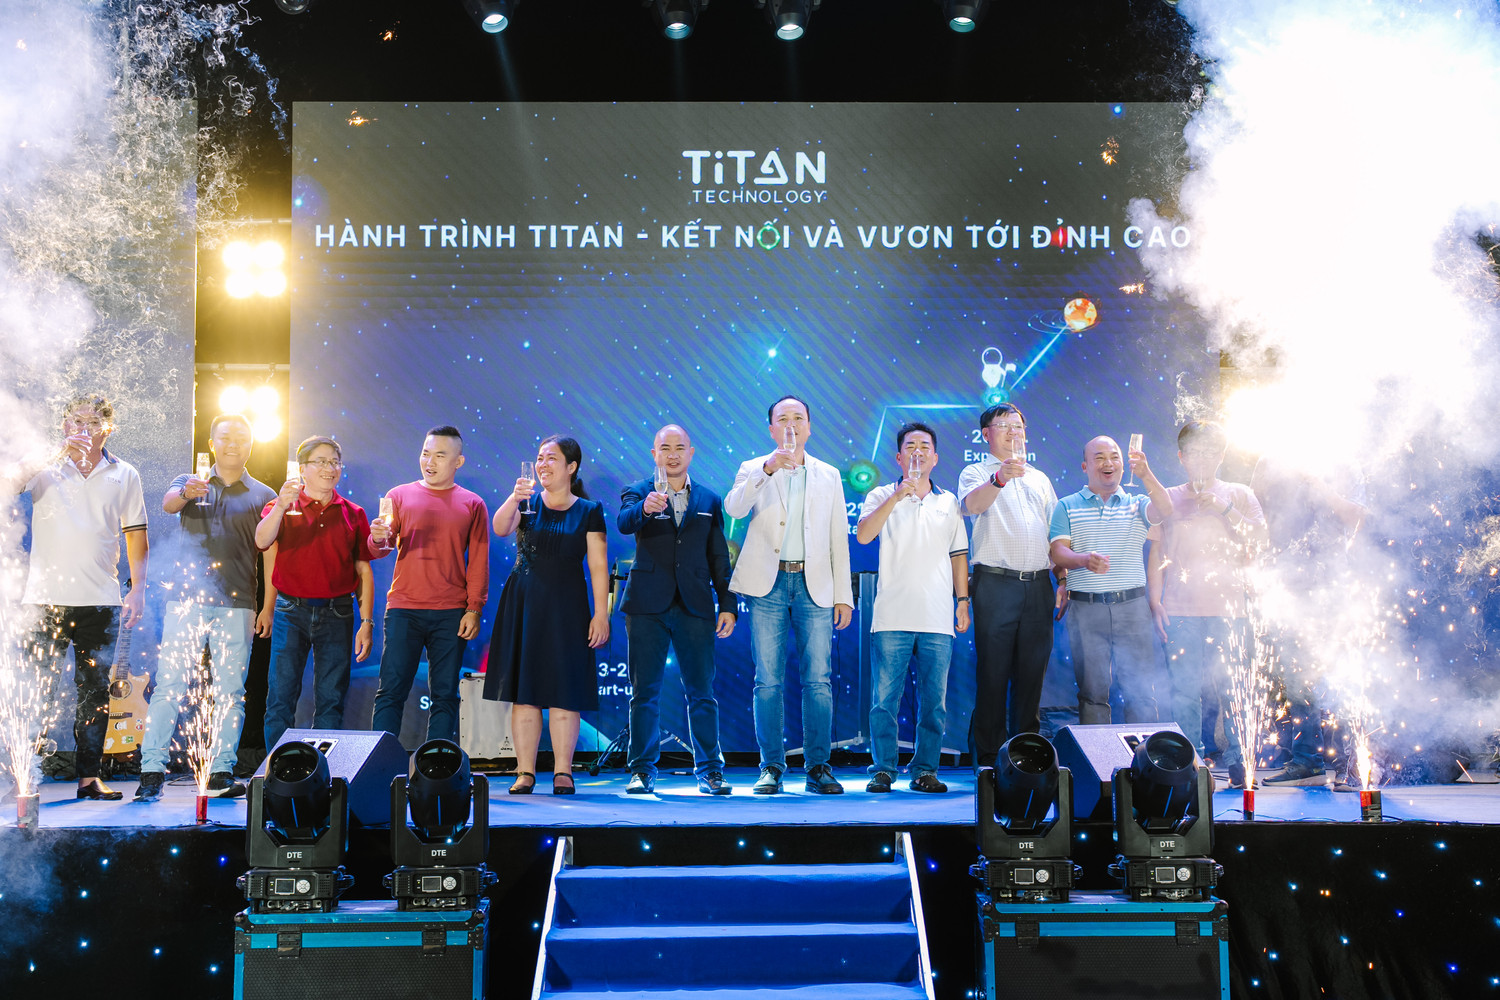 Titan Technology Corporation